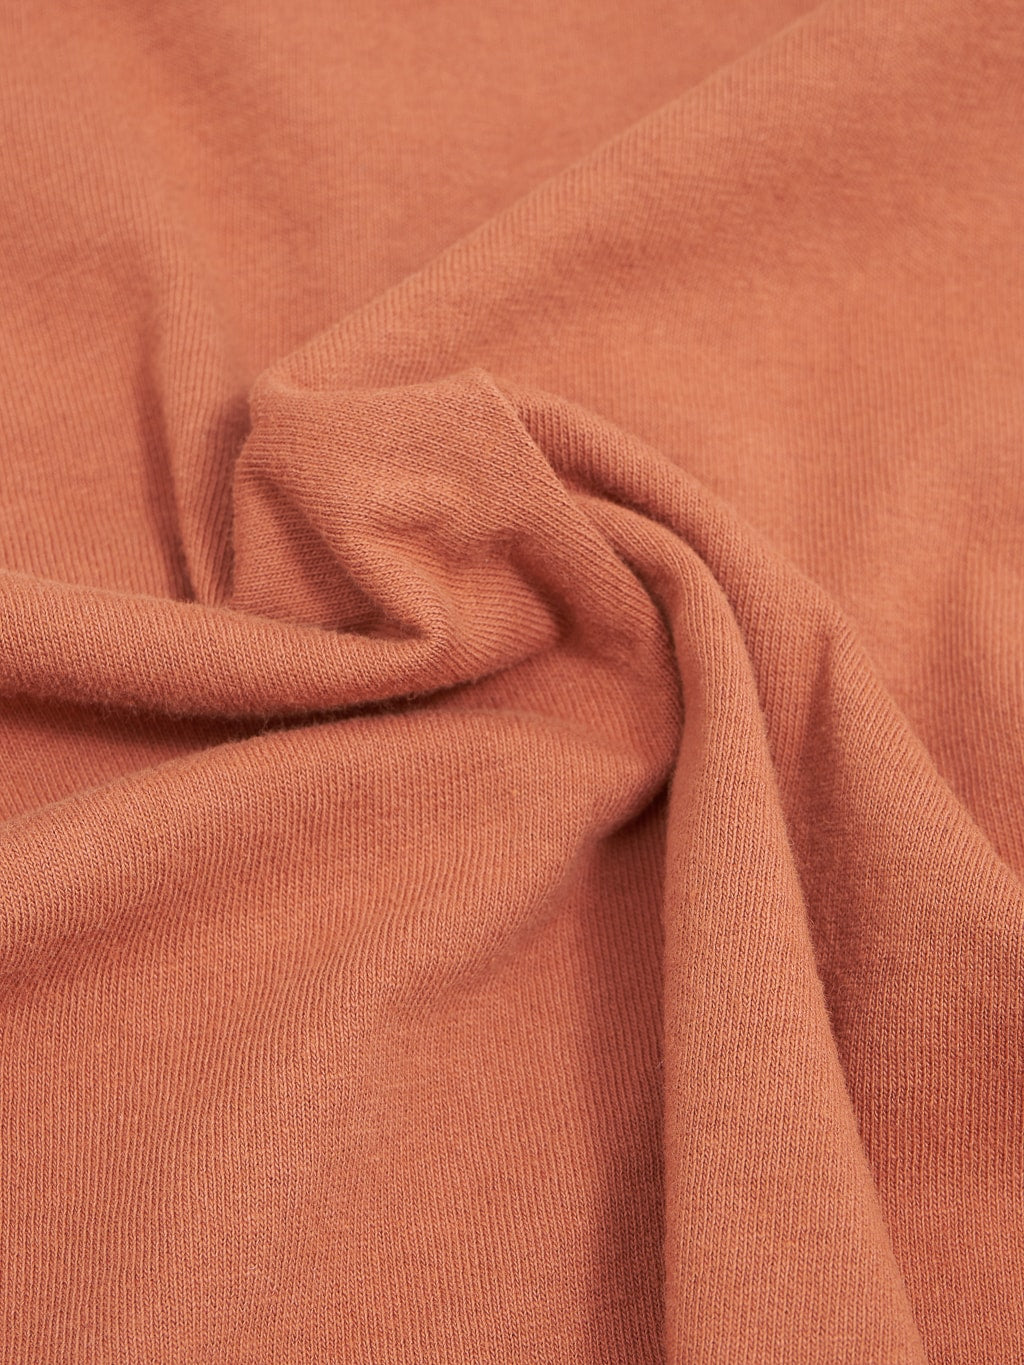 Freenote cloth nine ounce pocket tshirt rust cotton texture